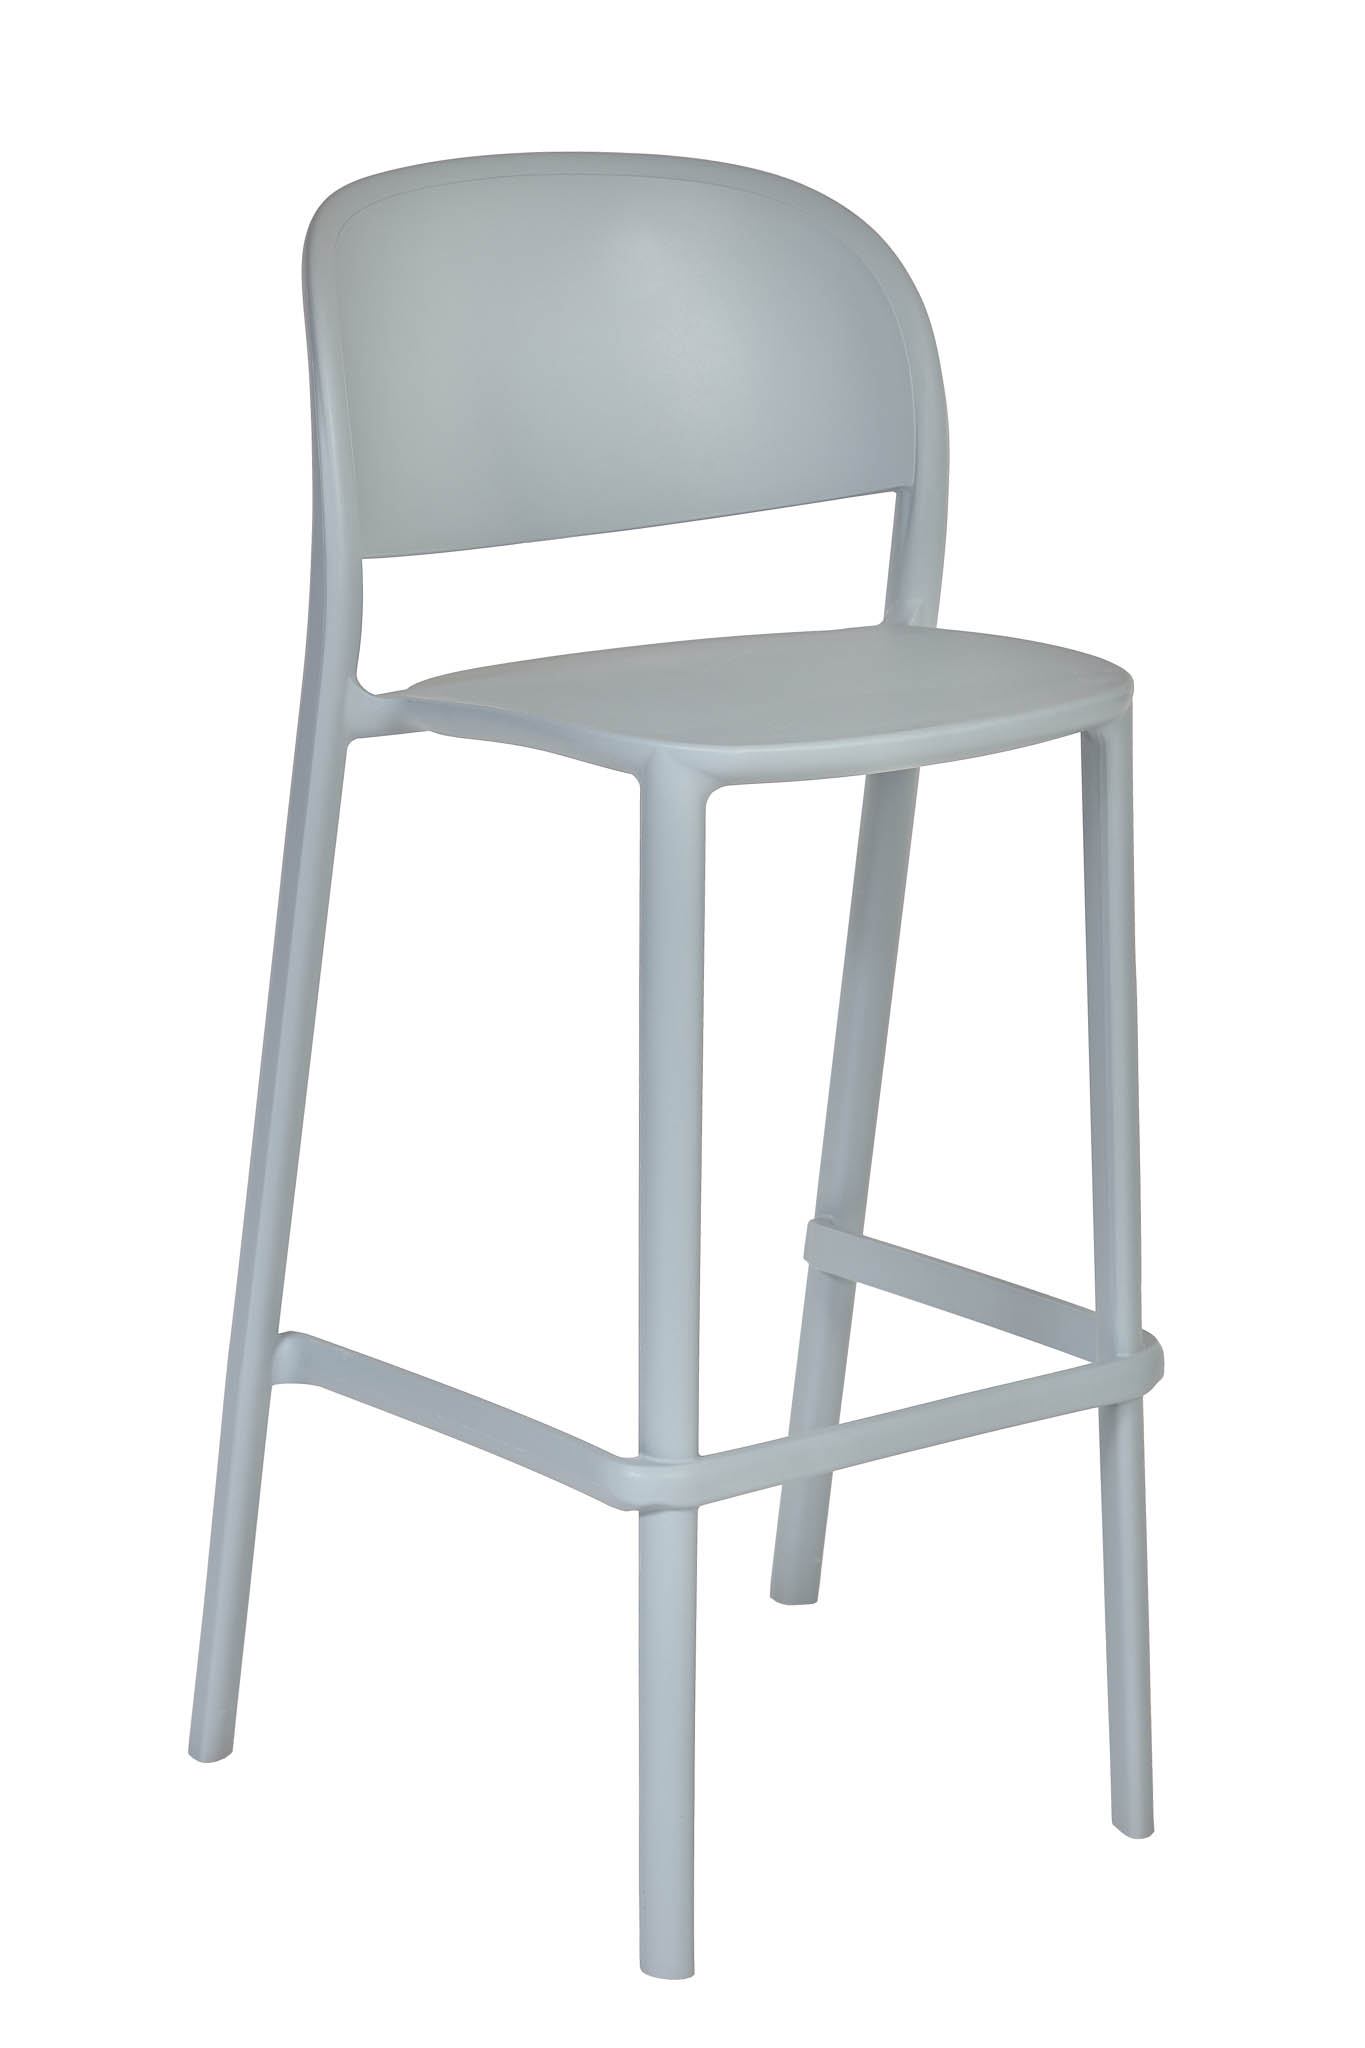 AD hotelska oprema Barska stolica 01 - Blue grey boje slika proizvoda